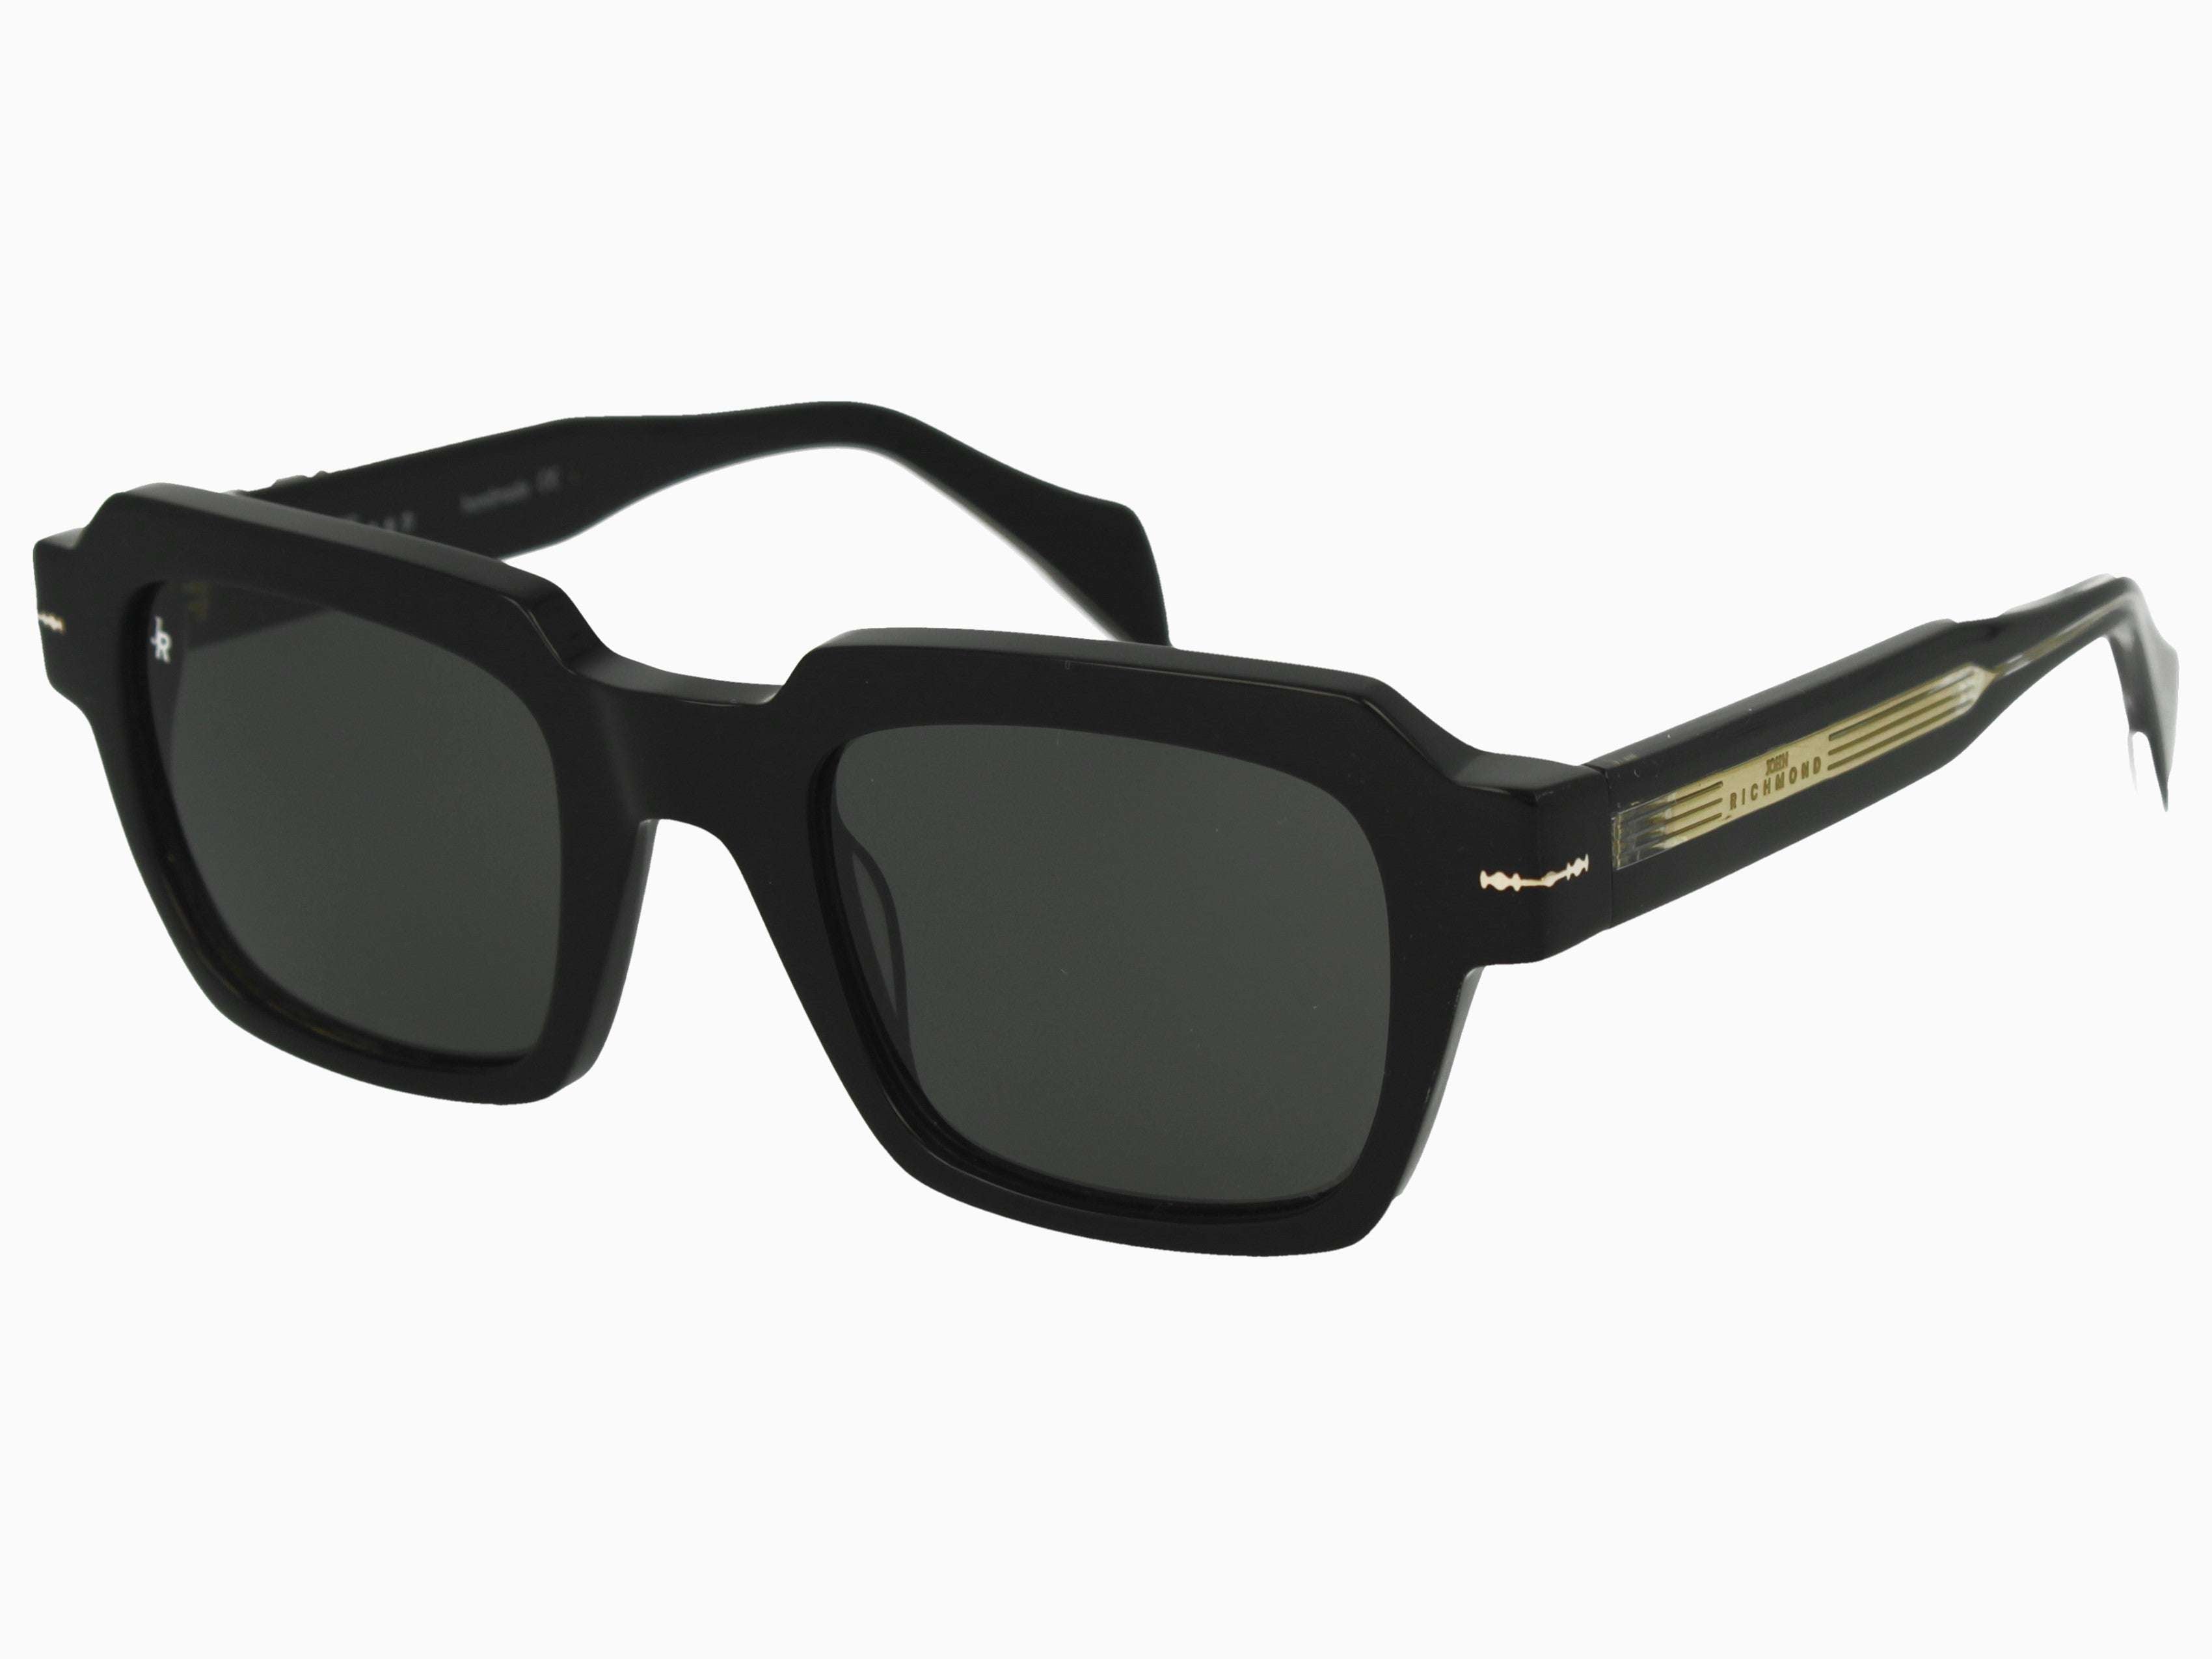 Sunglasses with wide lens – John Richmond